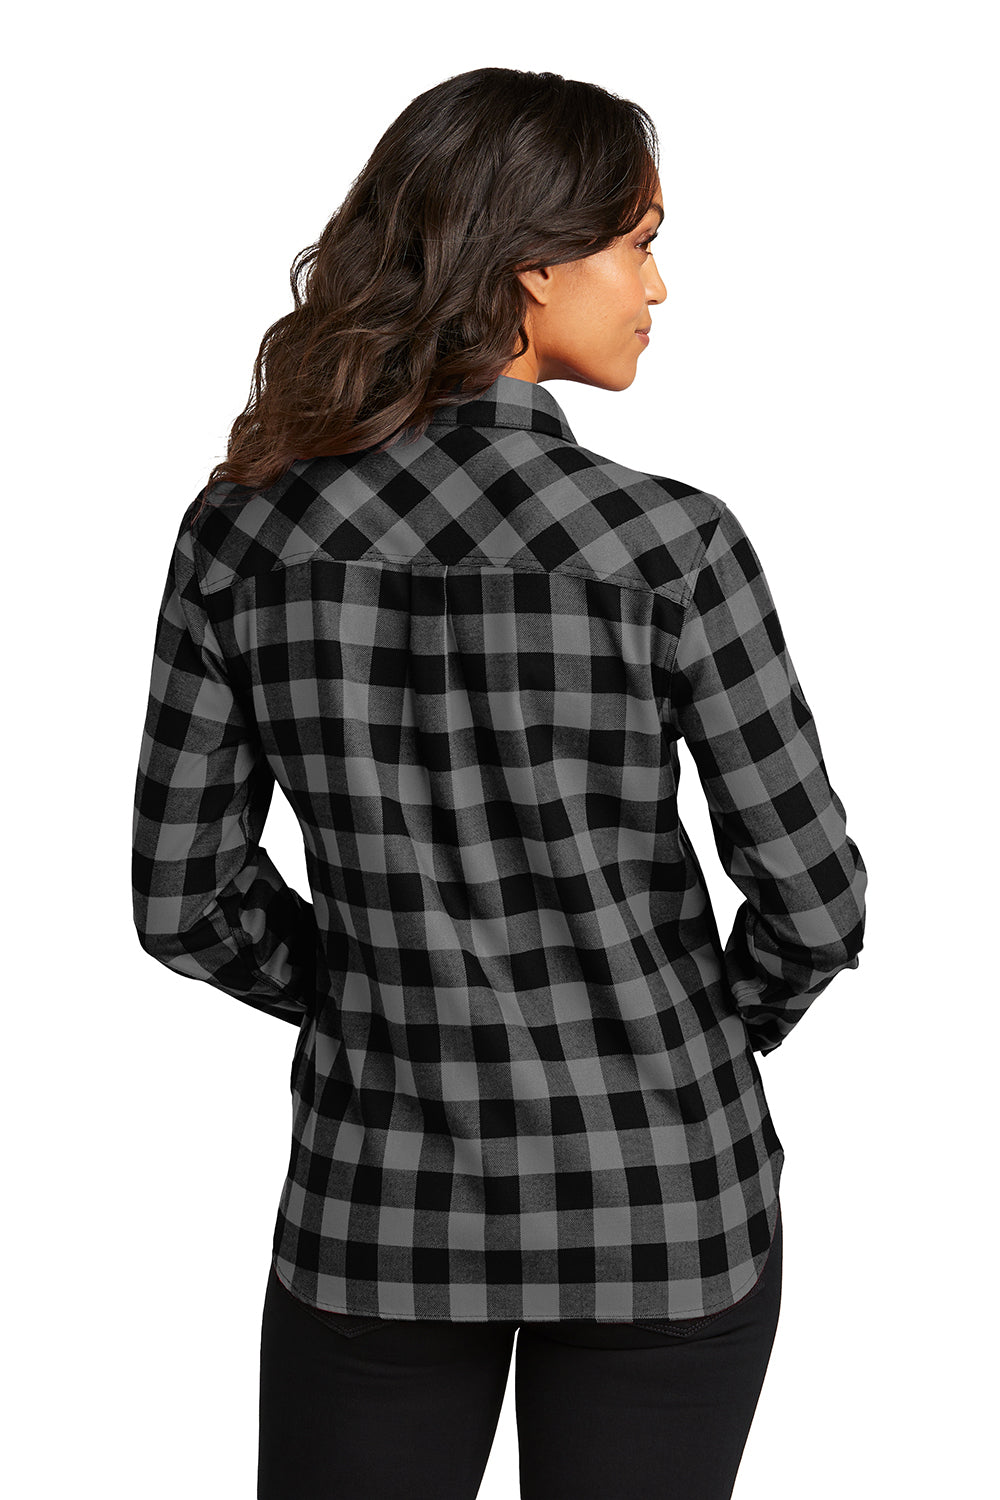 Port Authority LW669 Womens Plaid Flannel Long Sleeve Button Down Shirt Grey/Black Buffalo Back